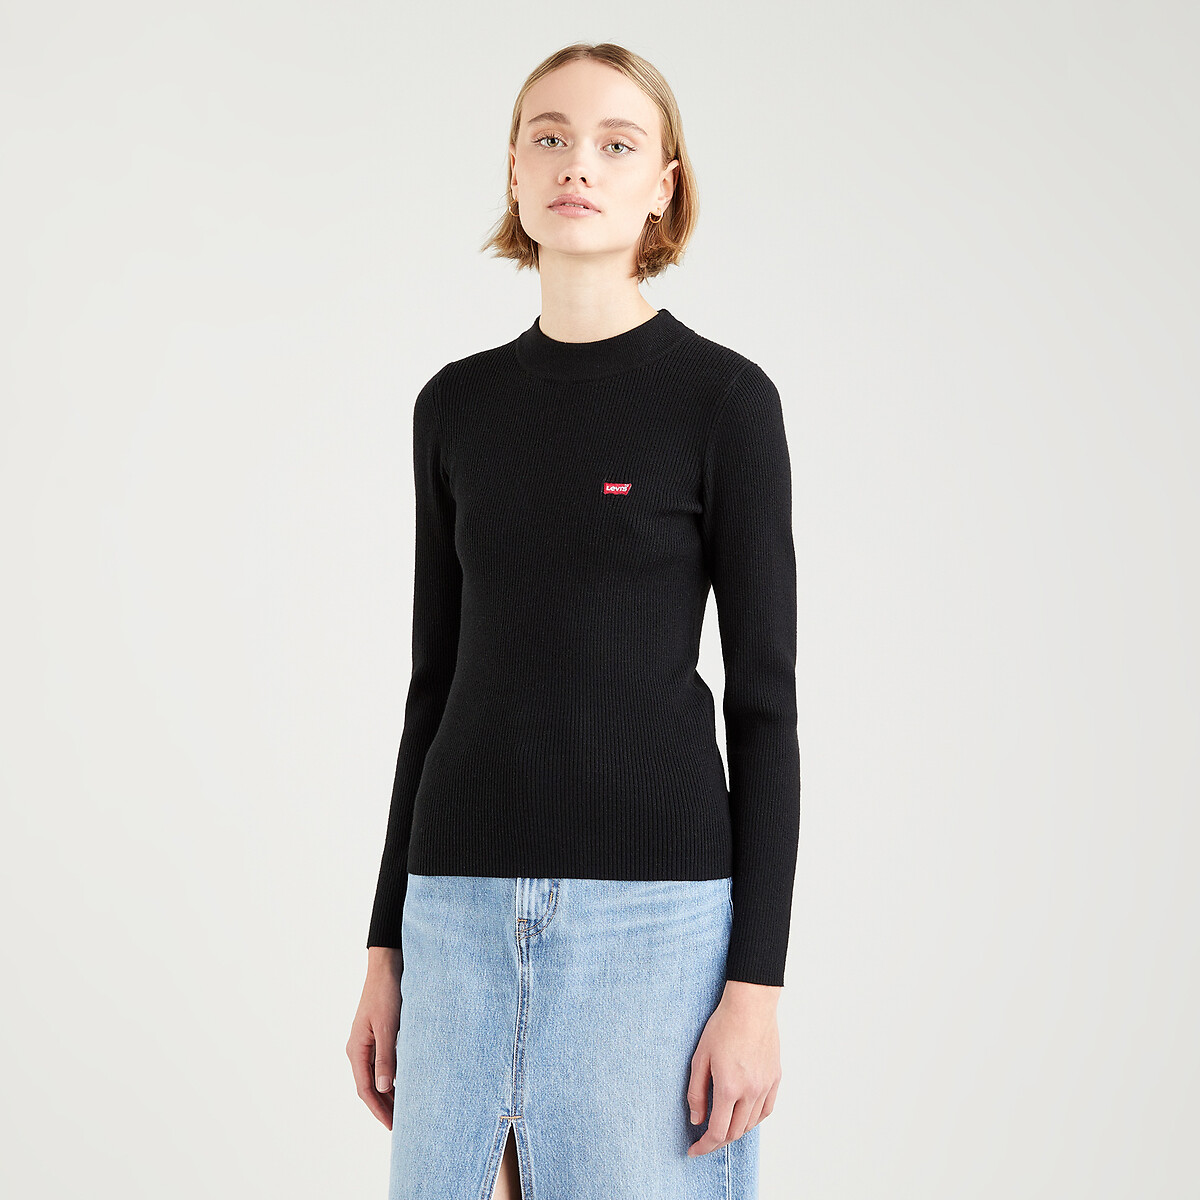 Fine knit logo jumper, black, Levi's | La Redoute